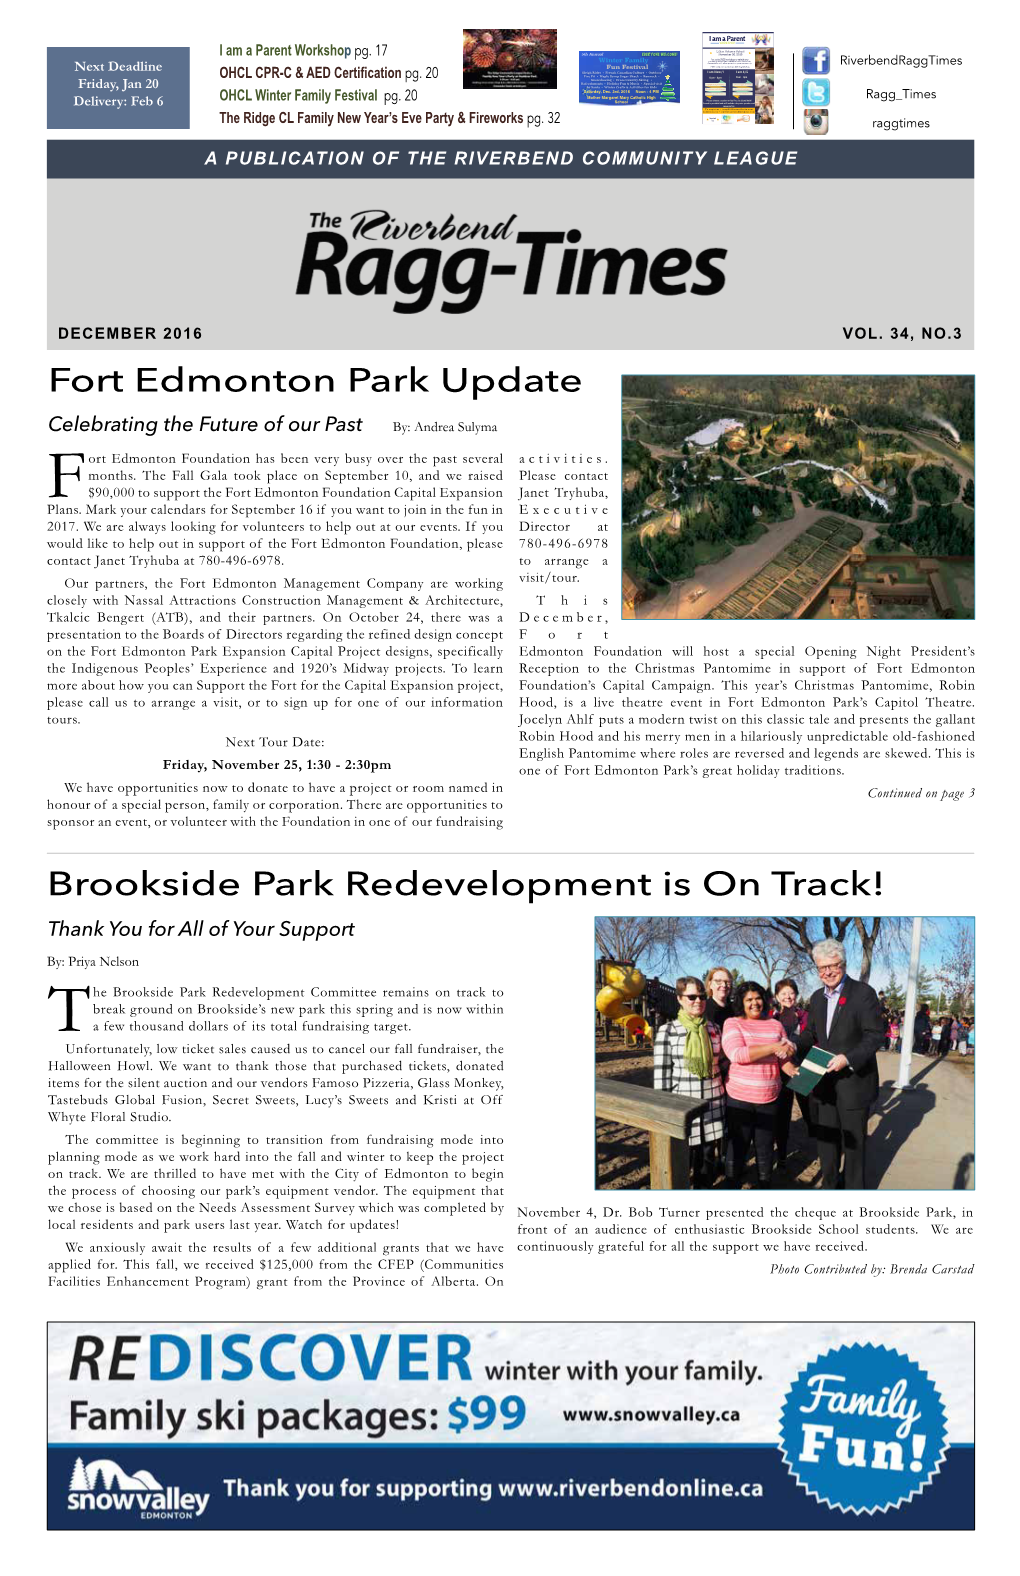 Fort Edmonton Park Update Brookside Park Redevelopment Is on Track!